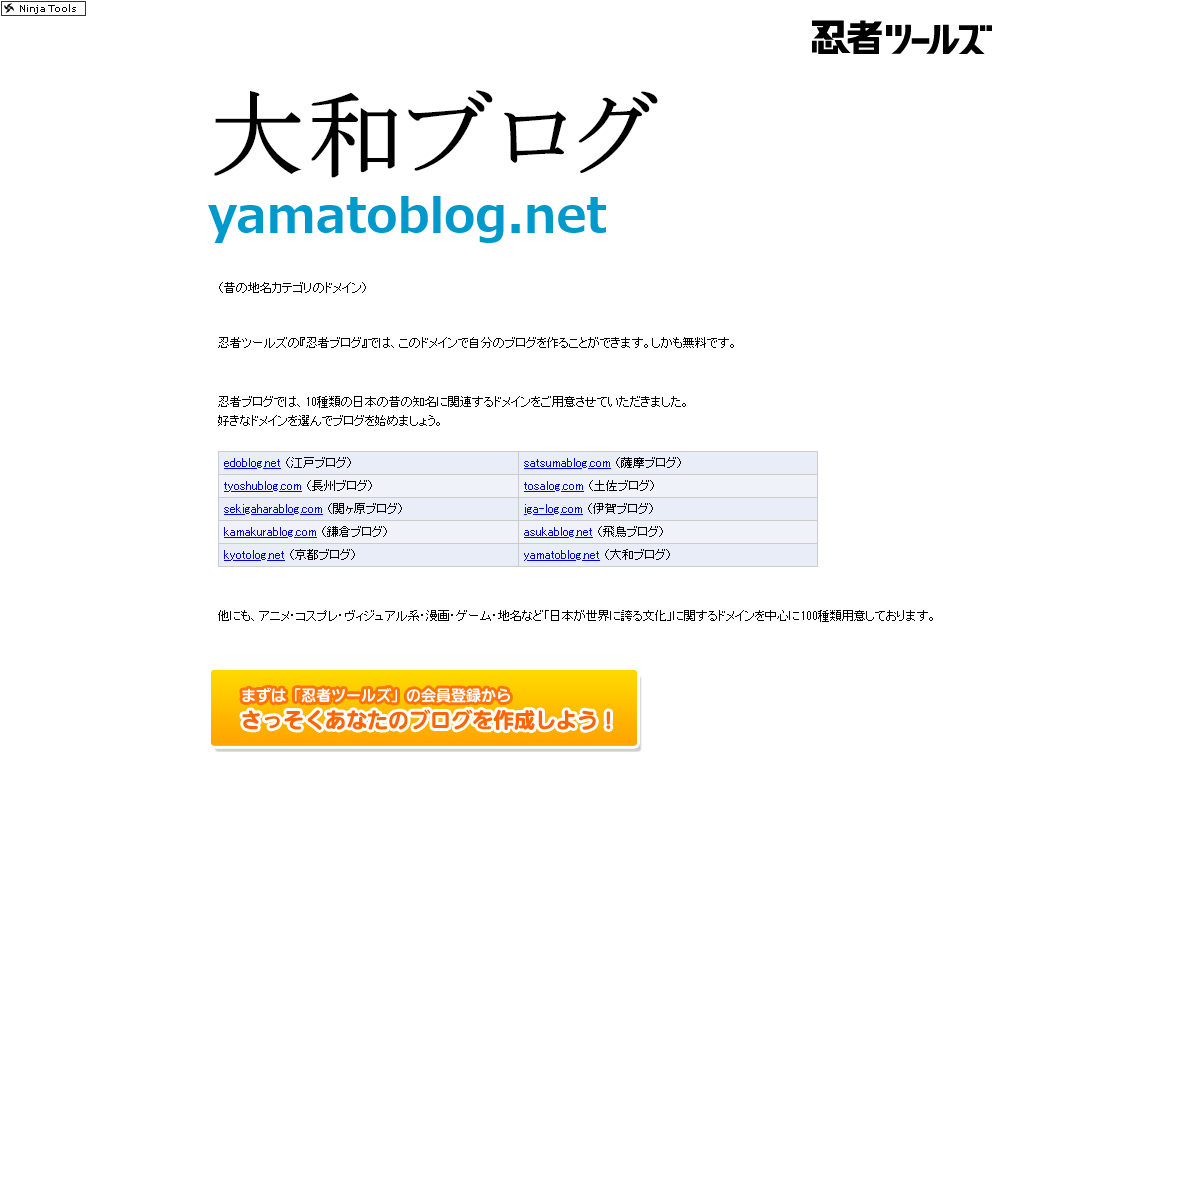 A complete backup of yamatoblog.net